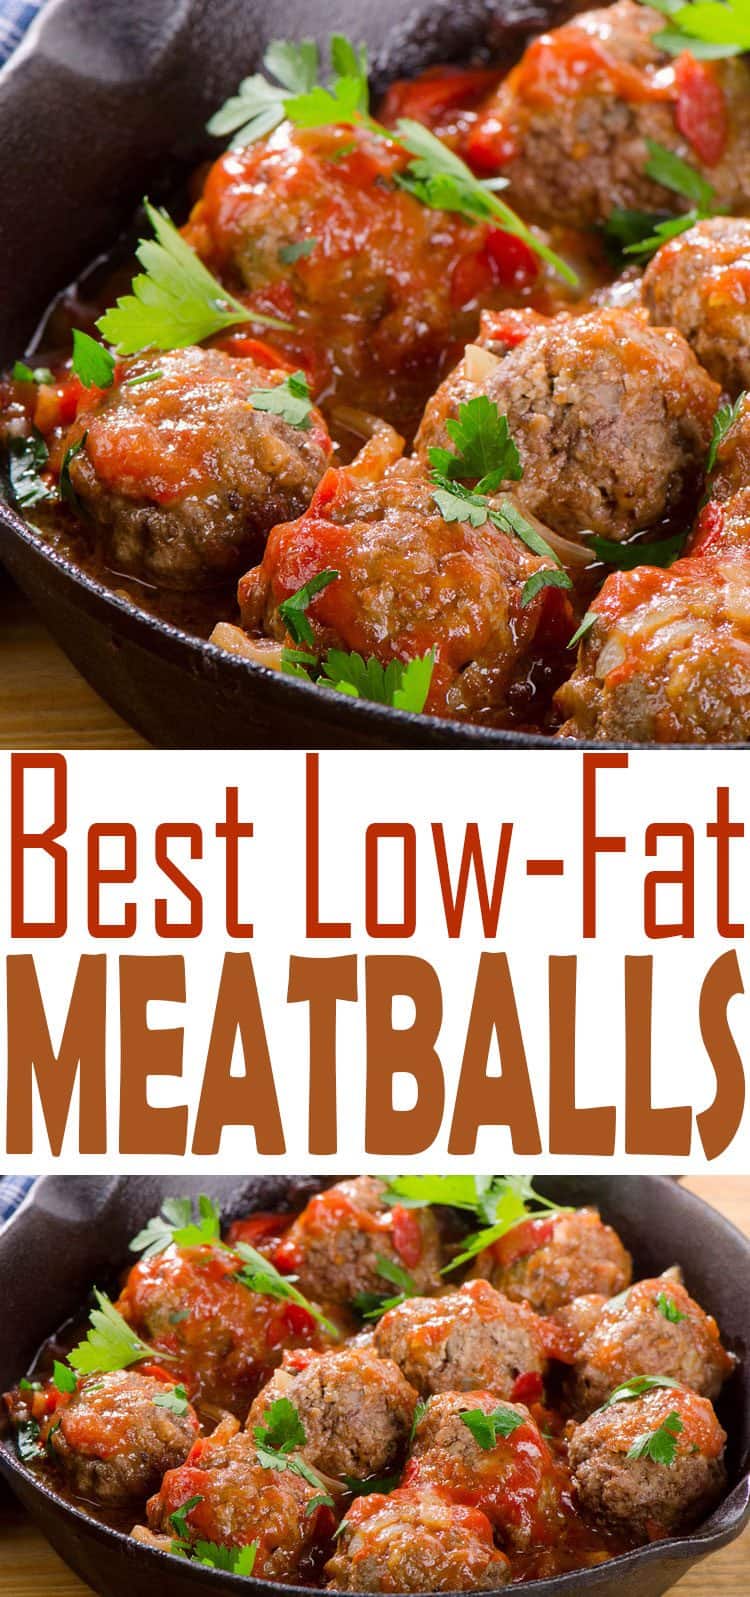 Weight Watchers Meatballs - Low Fat Meatballs Recipe